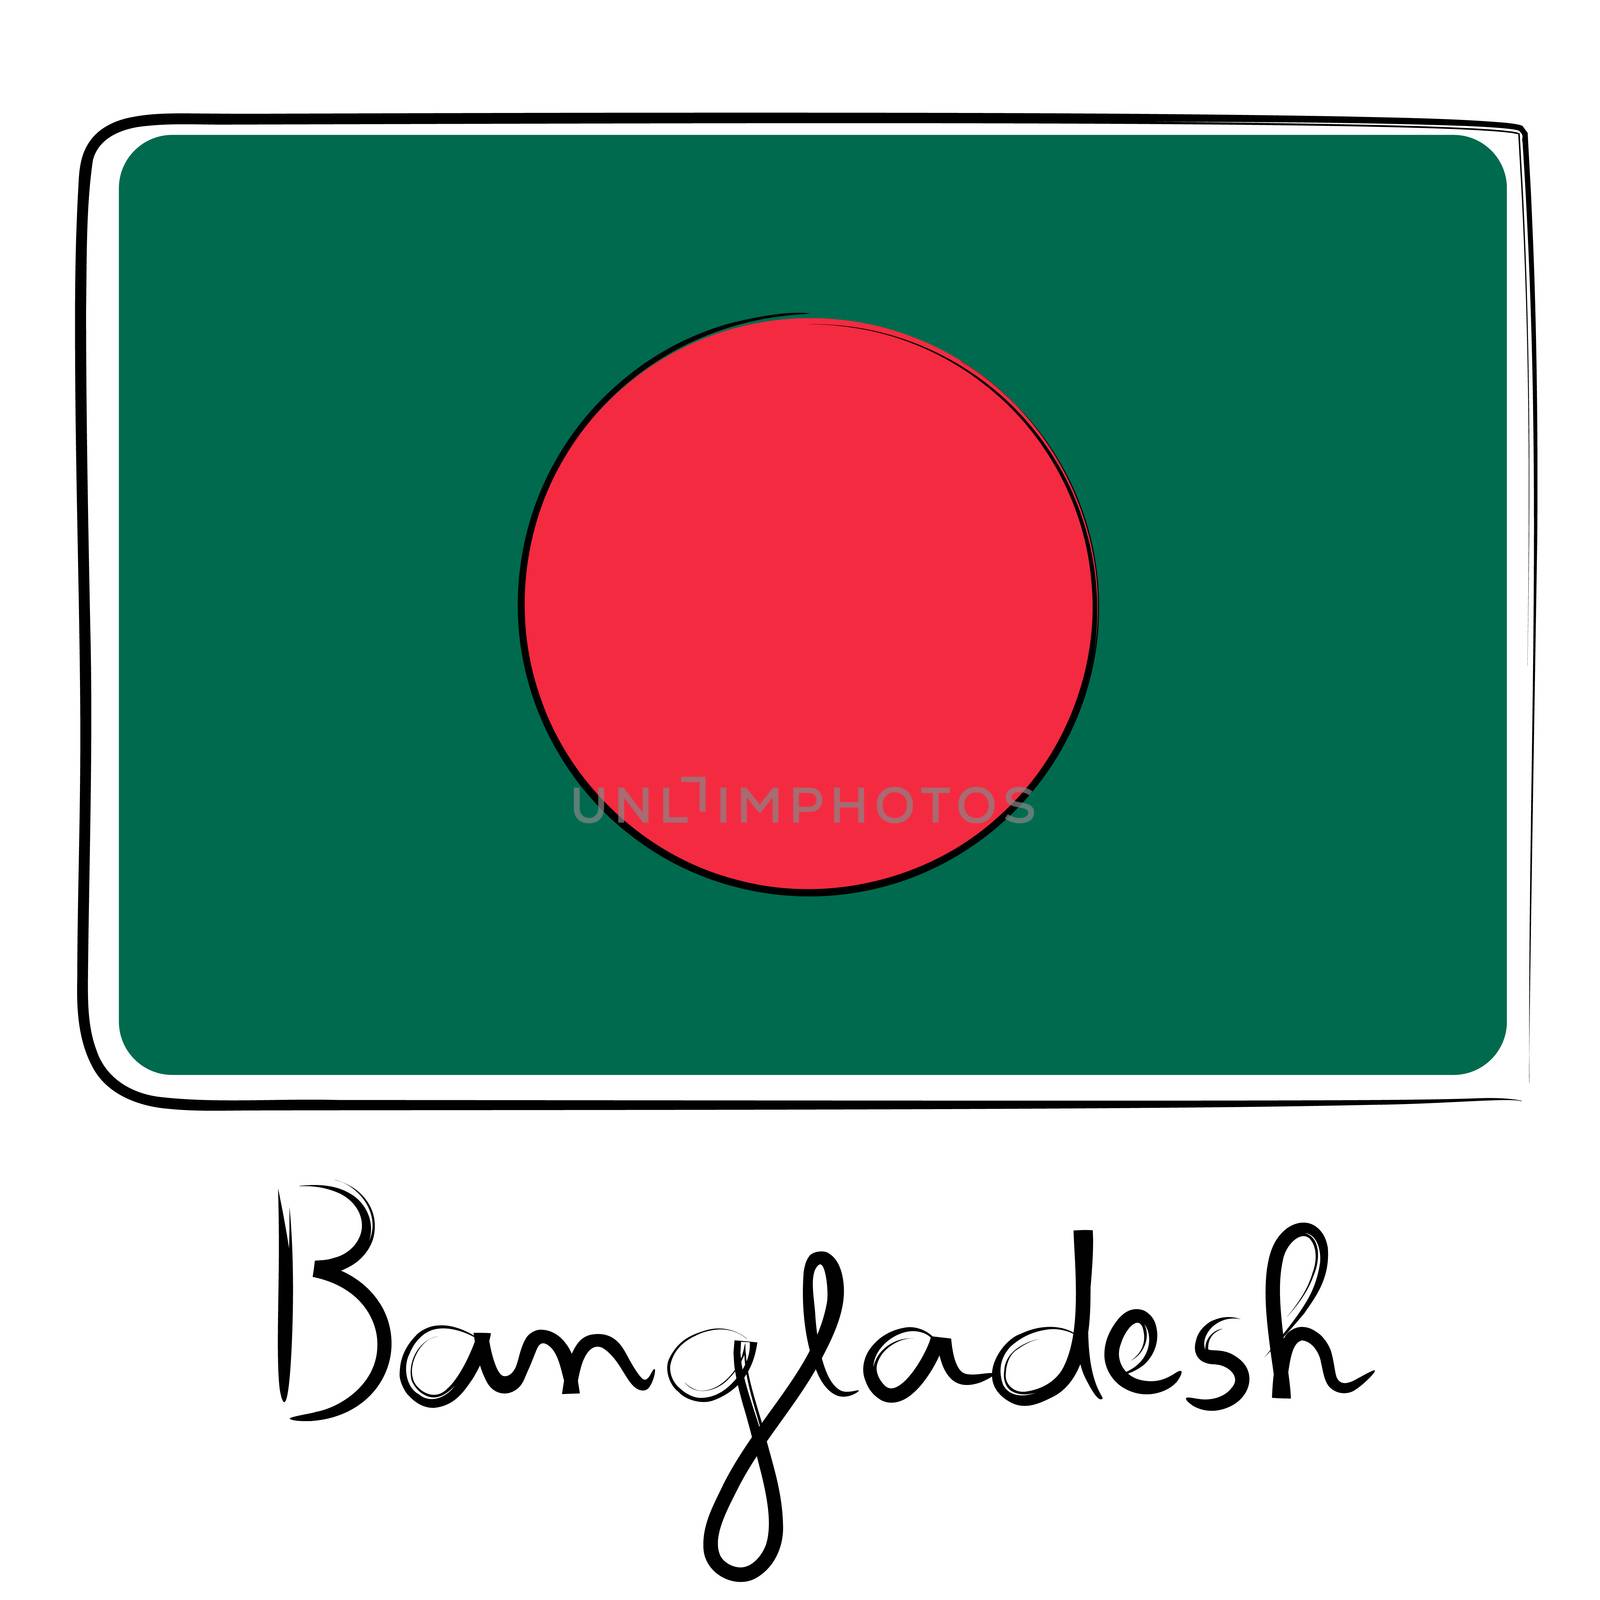 Bangladesh flag doodle by catacos